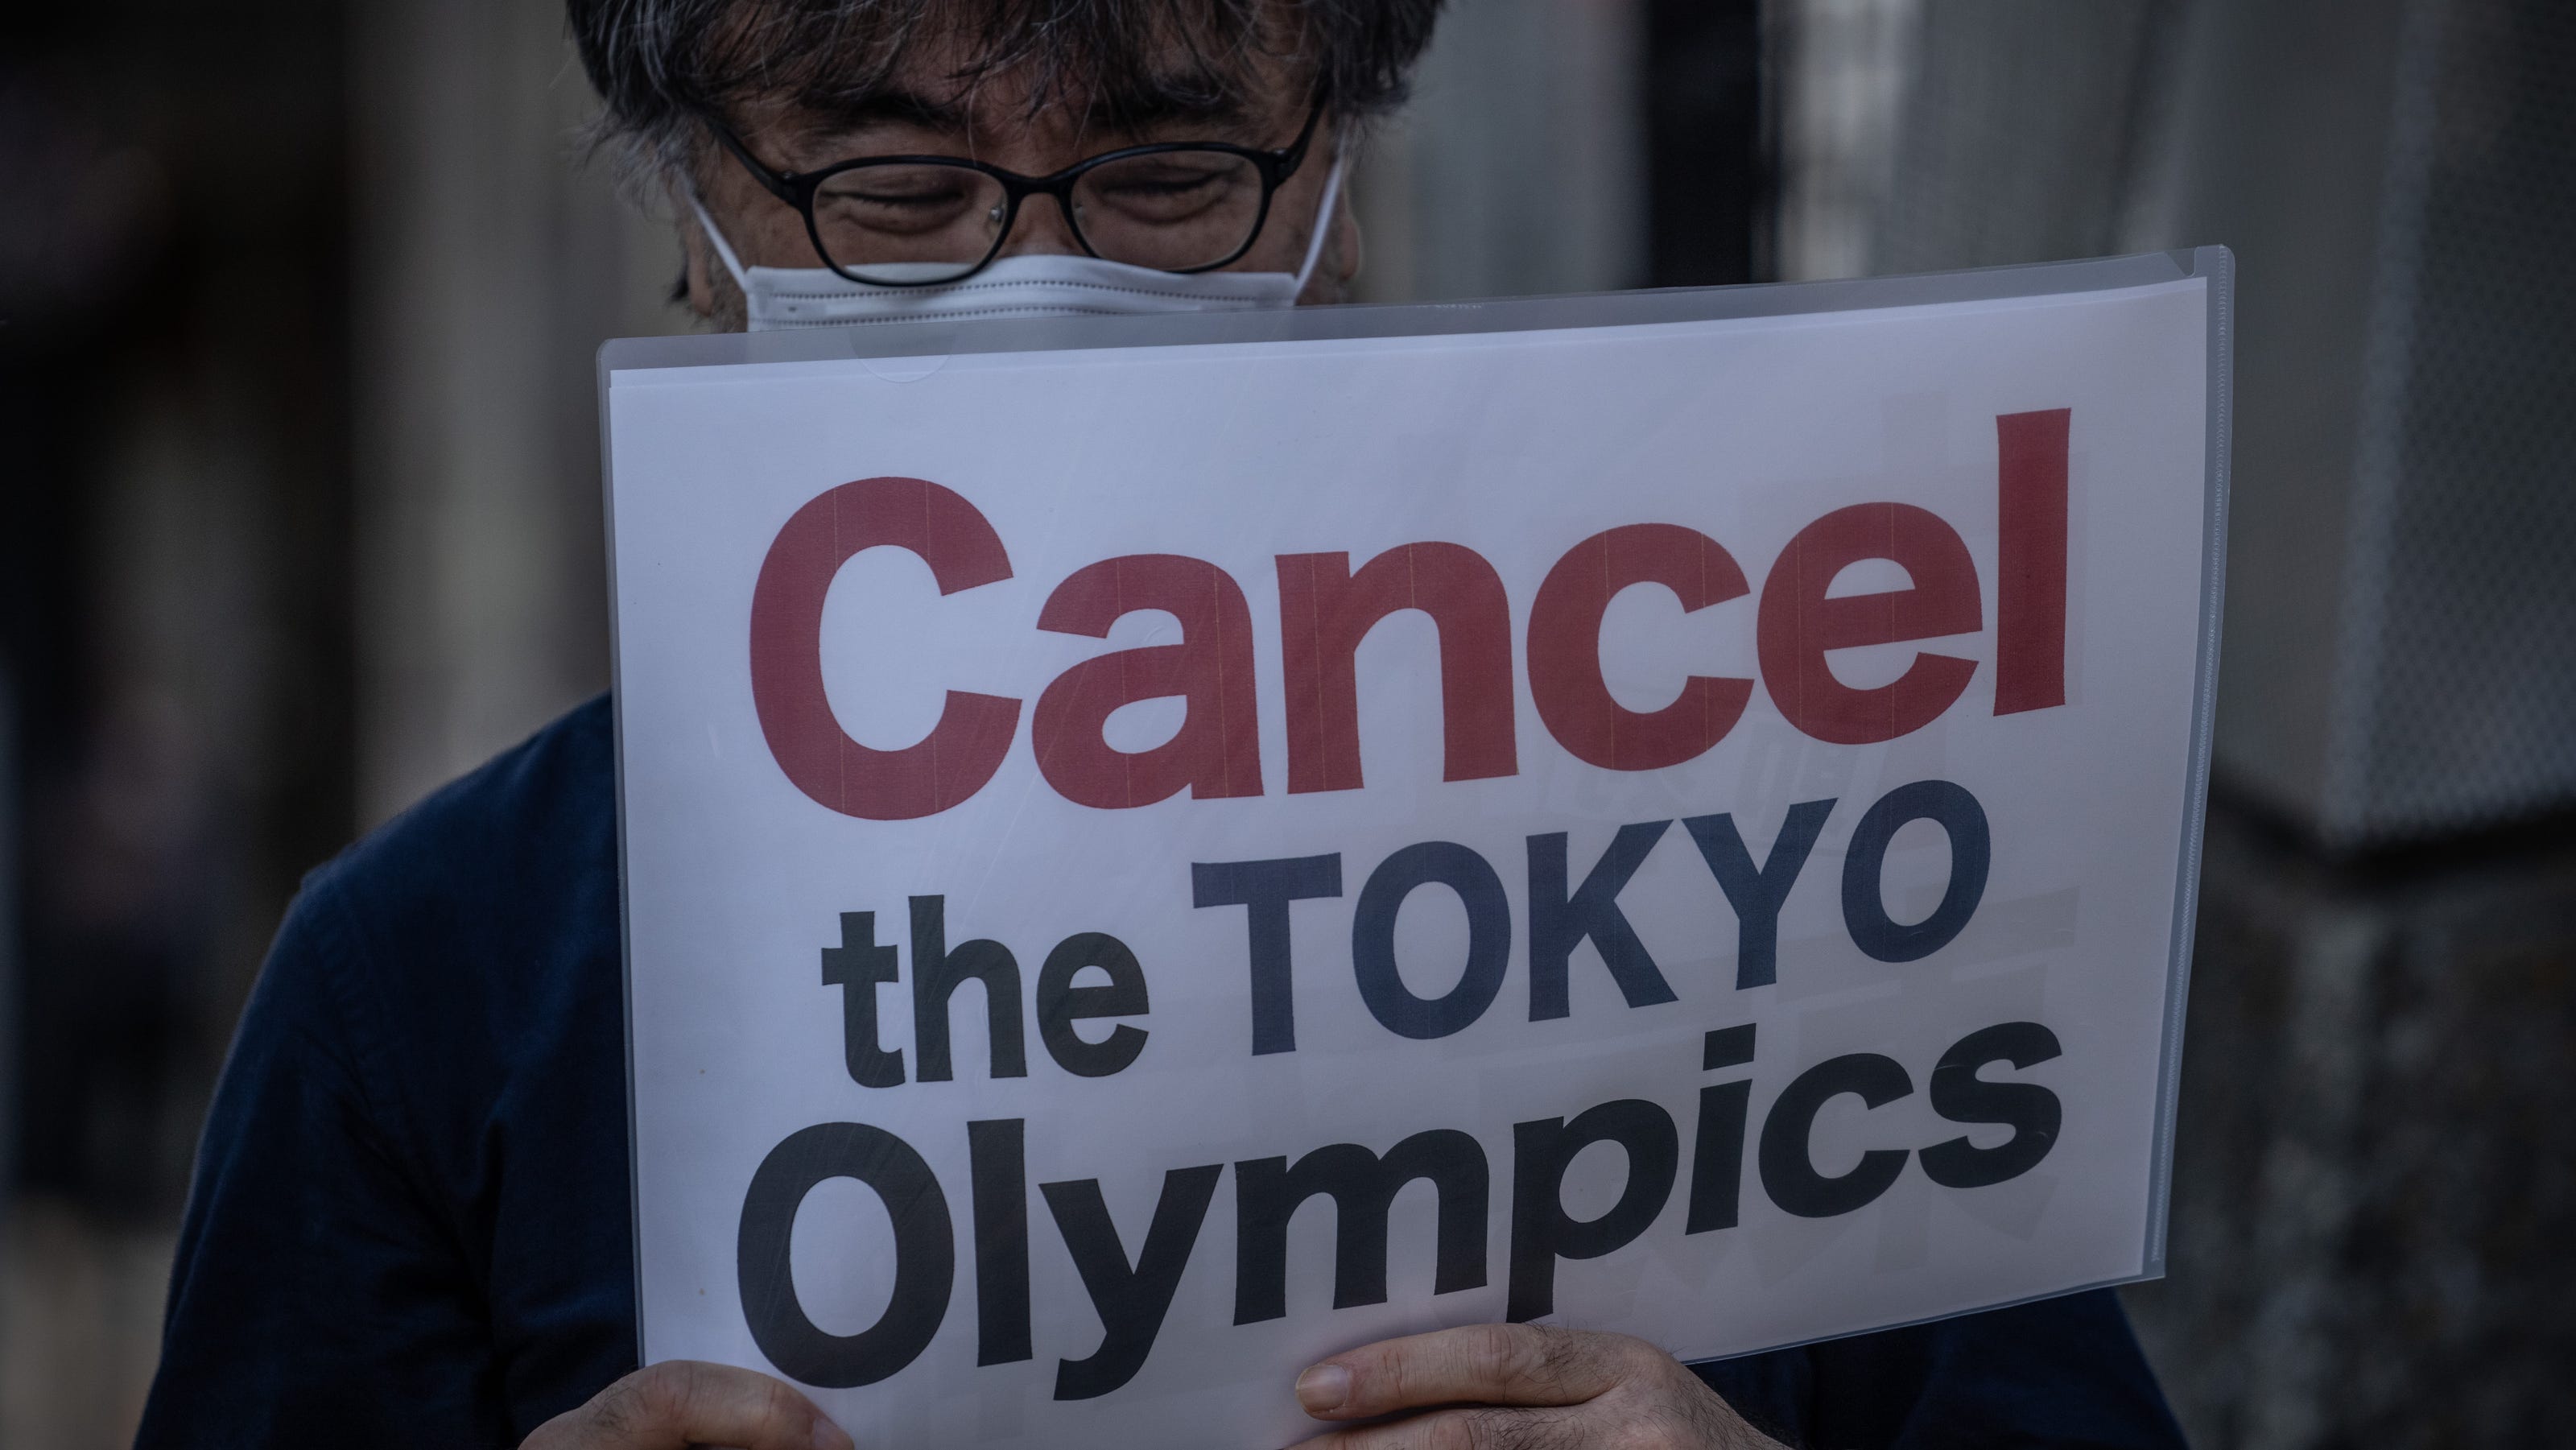 Tokyo Summer Olympics should be canceled, major Japan newspaper says